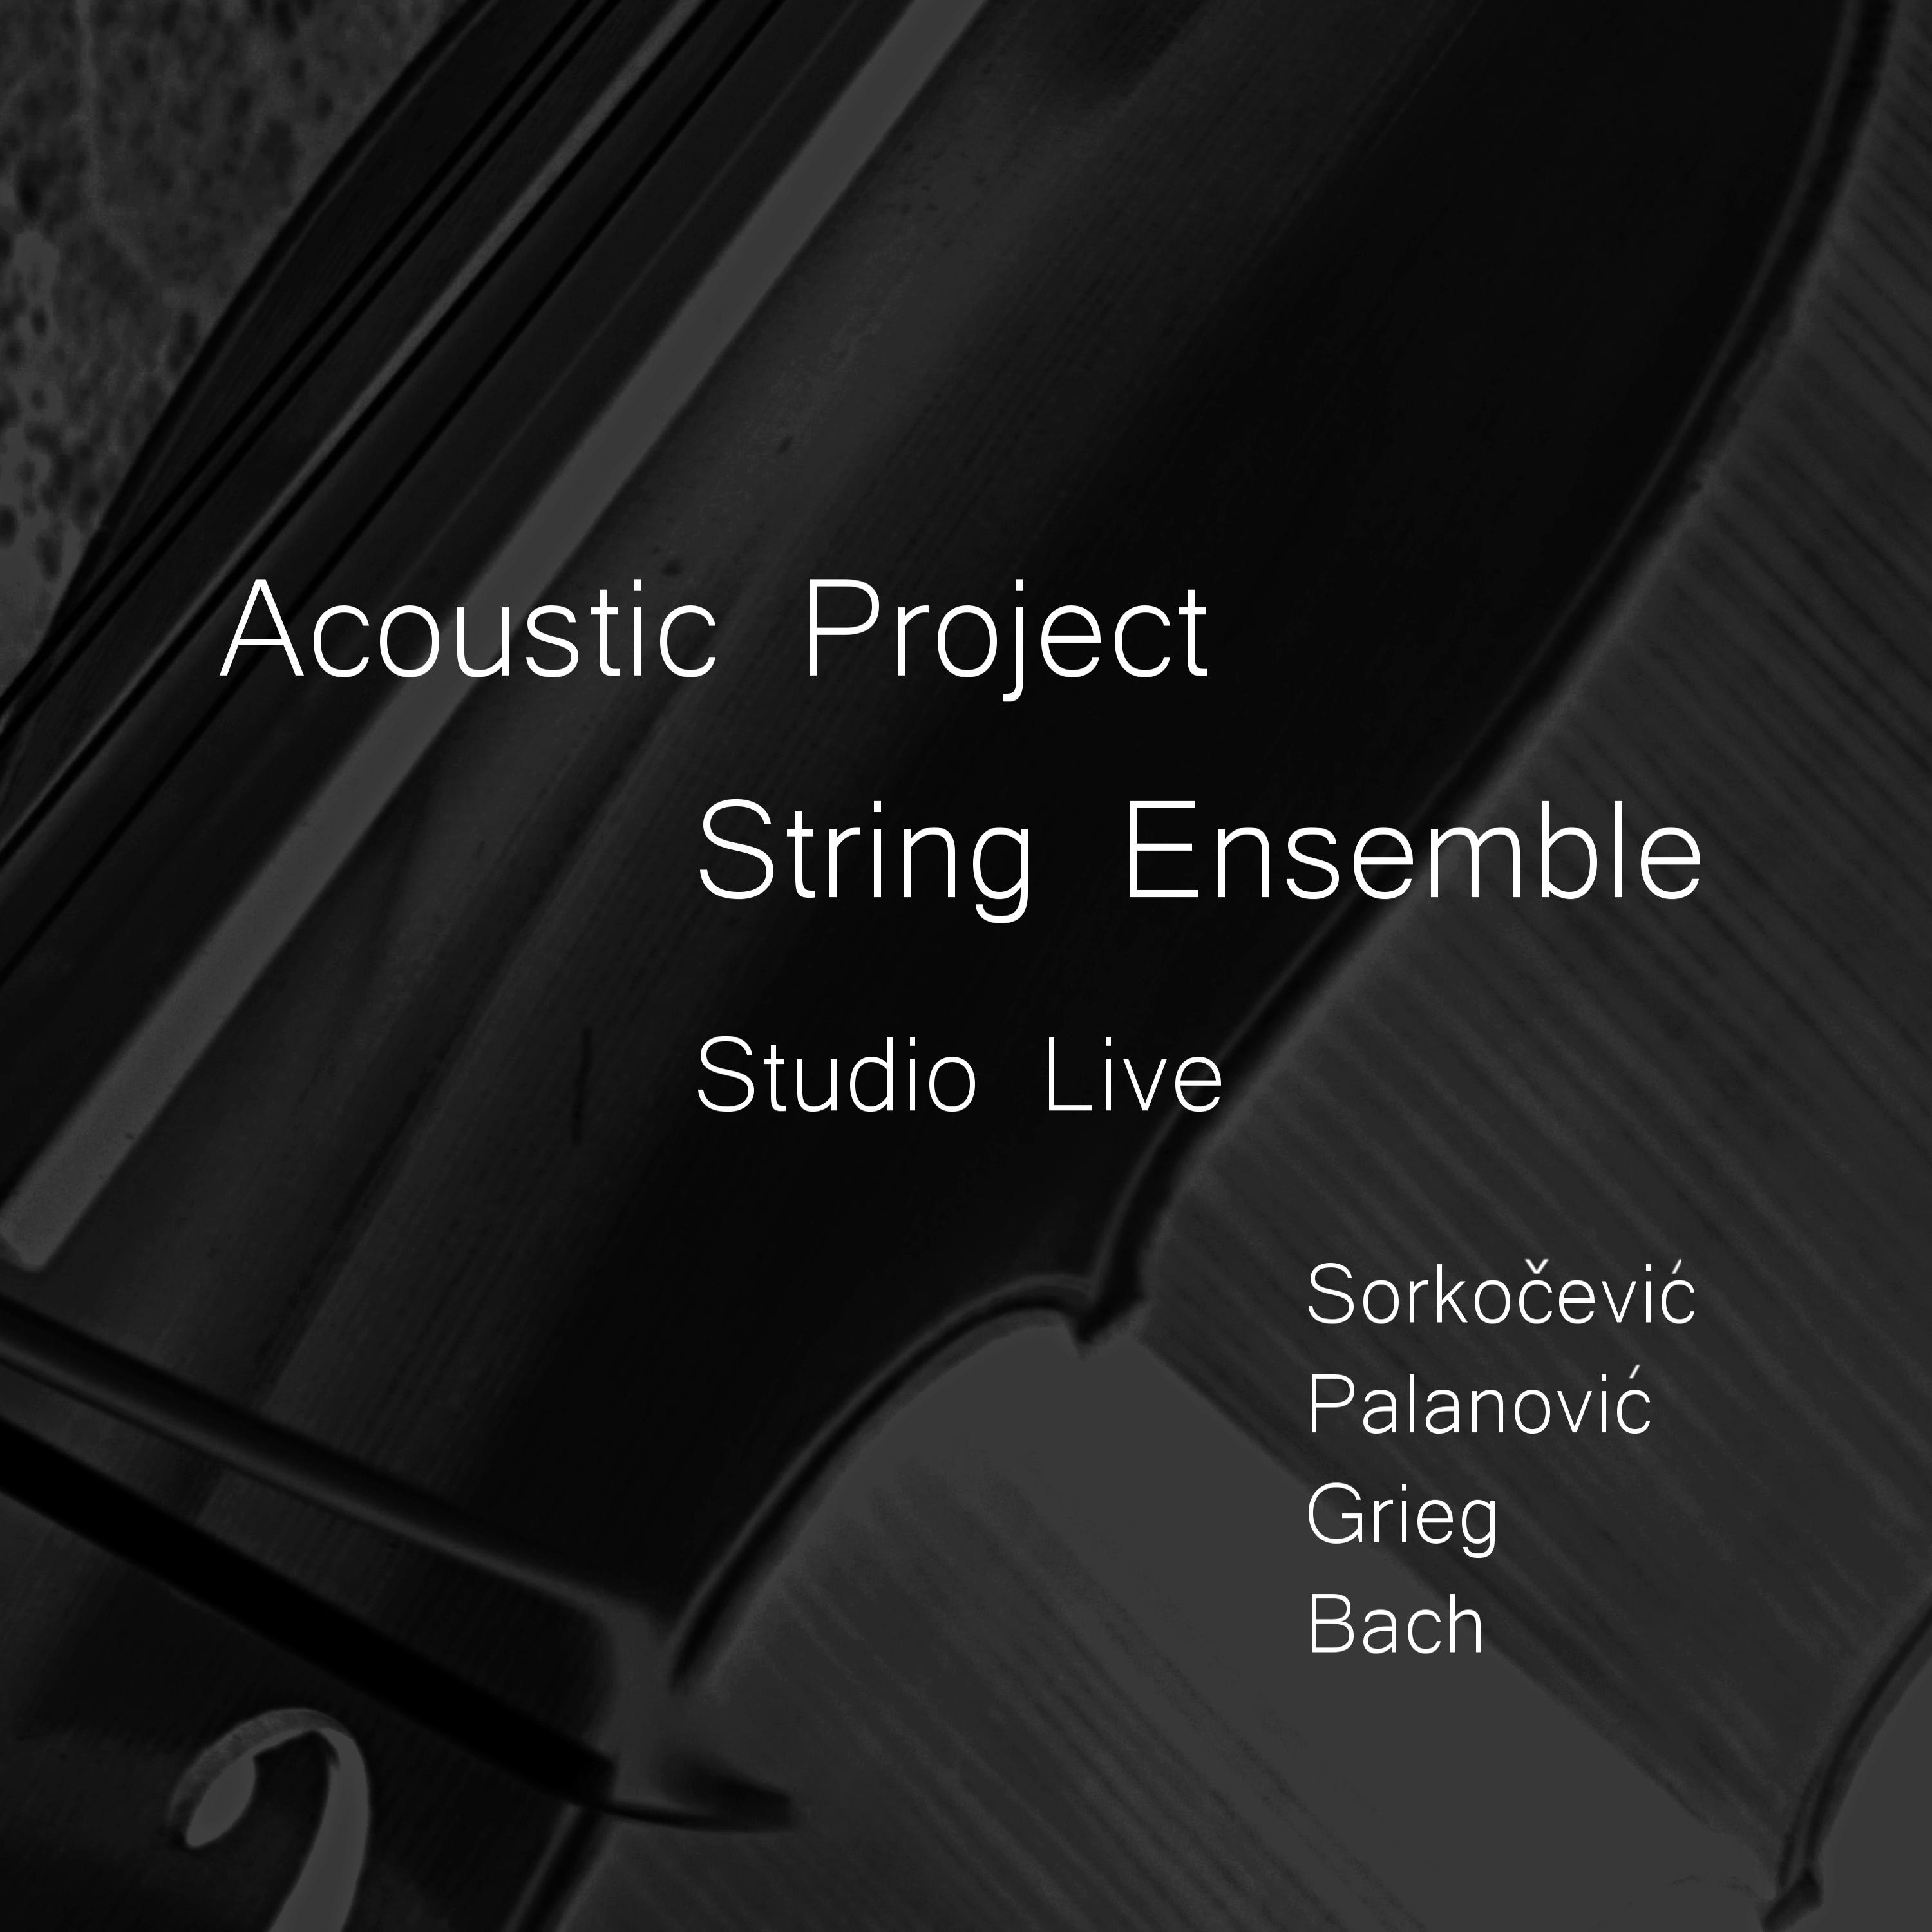 Acoustic Project String Ensemble: Studio Live I